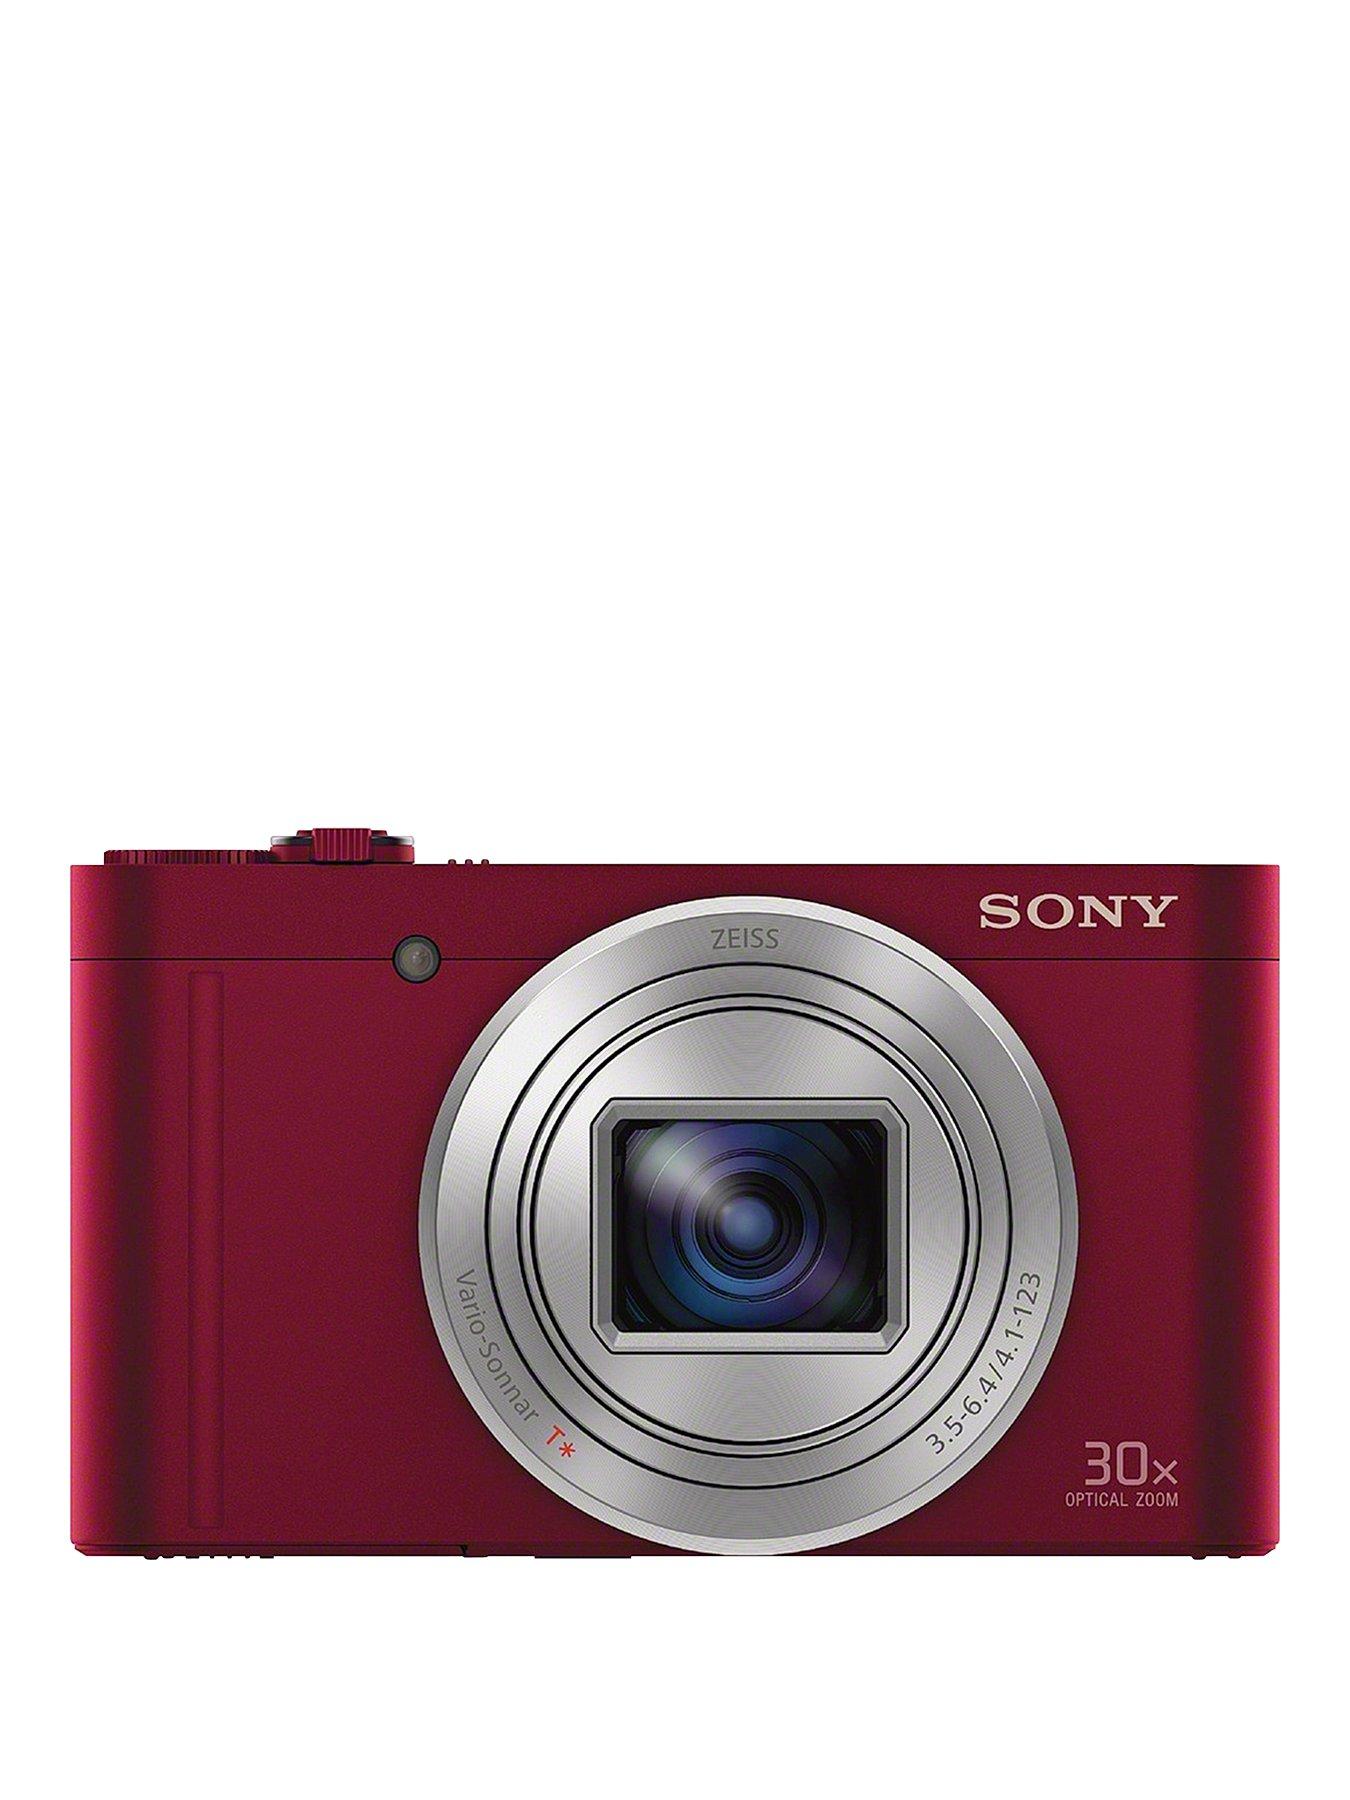 Sony Cybershot Dsc Wx500 18.2 Megapixel Digital Compact Camera With Selfie Screen – Red